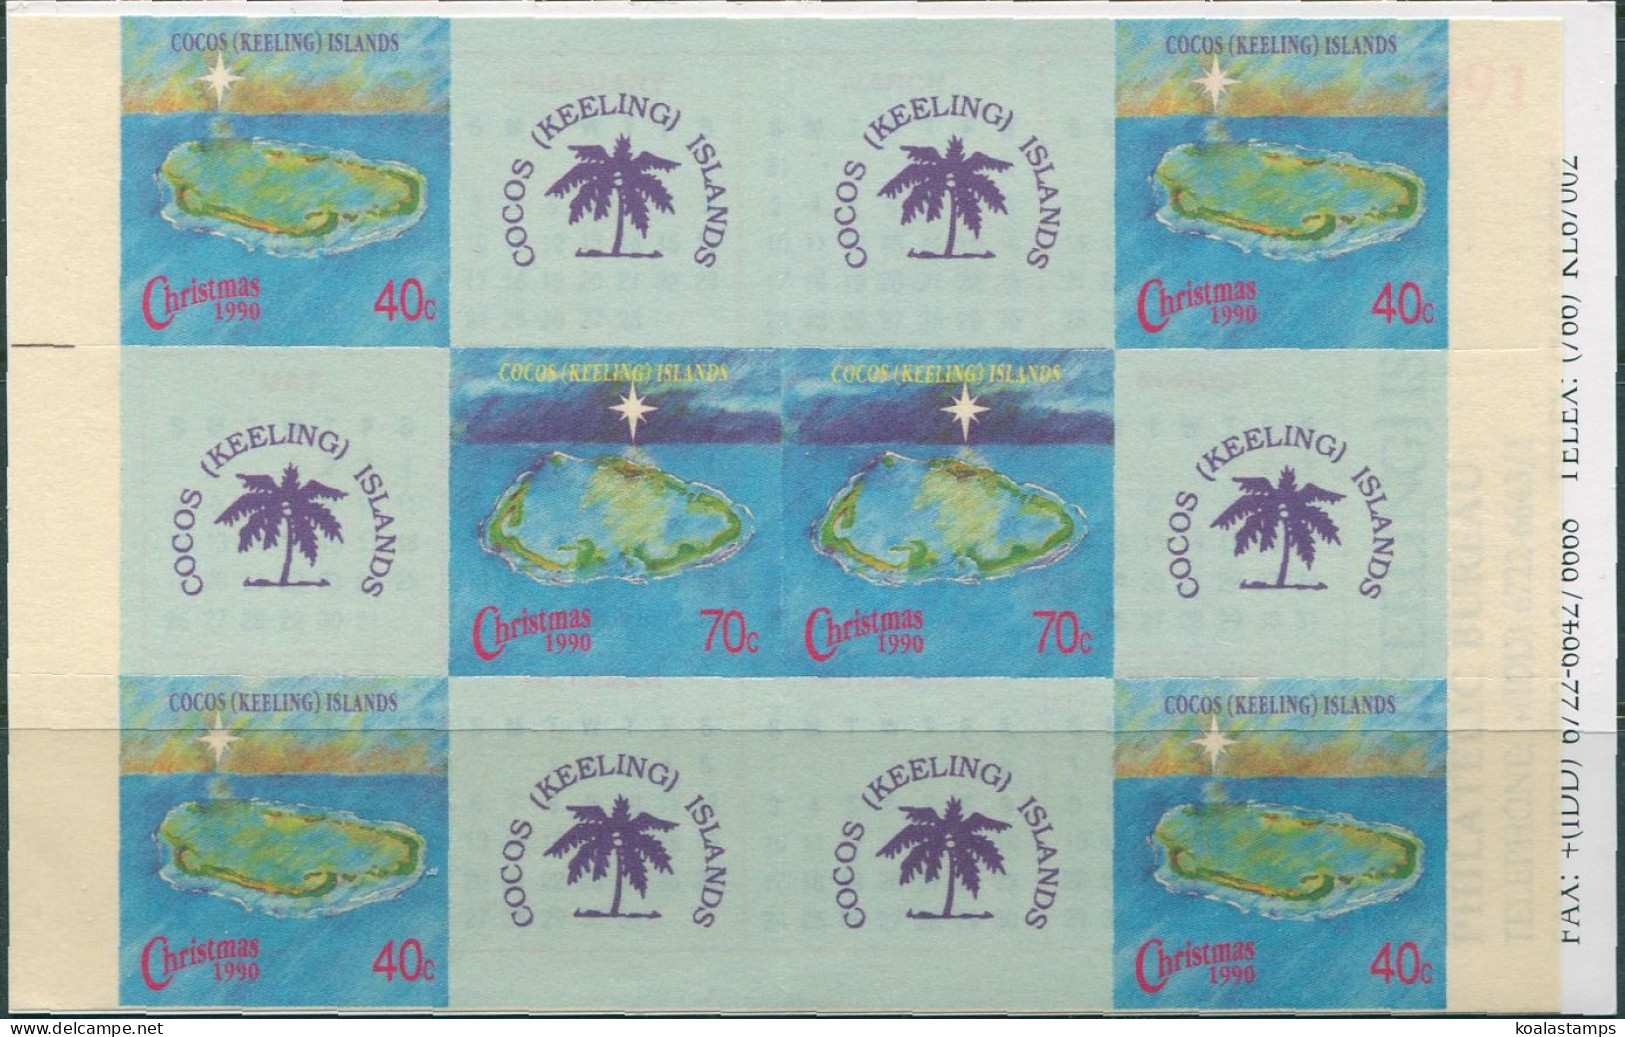 Cocos Islands 1990 SG231B Christmas Booklet MNH - Kokosinseln (Keeling Islands)